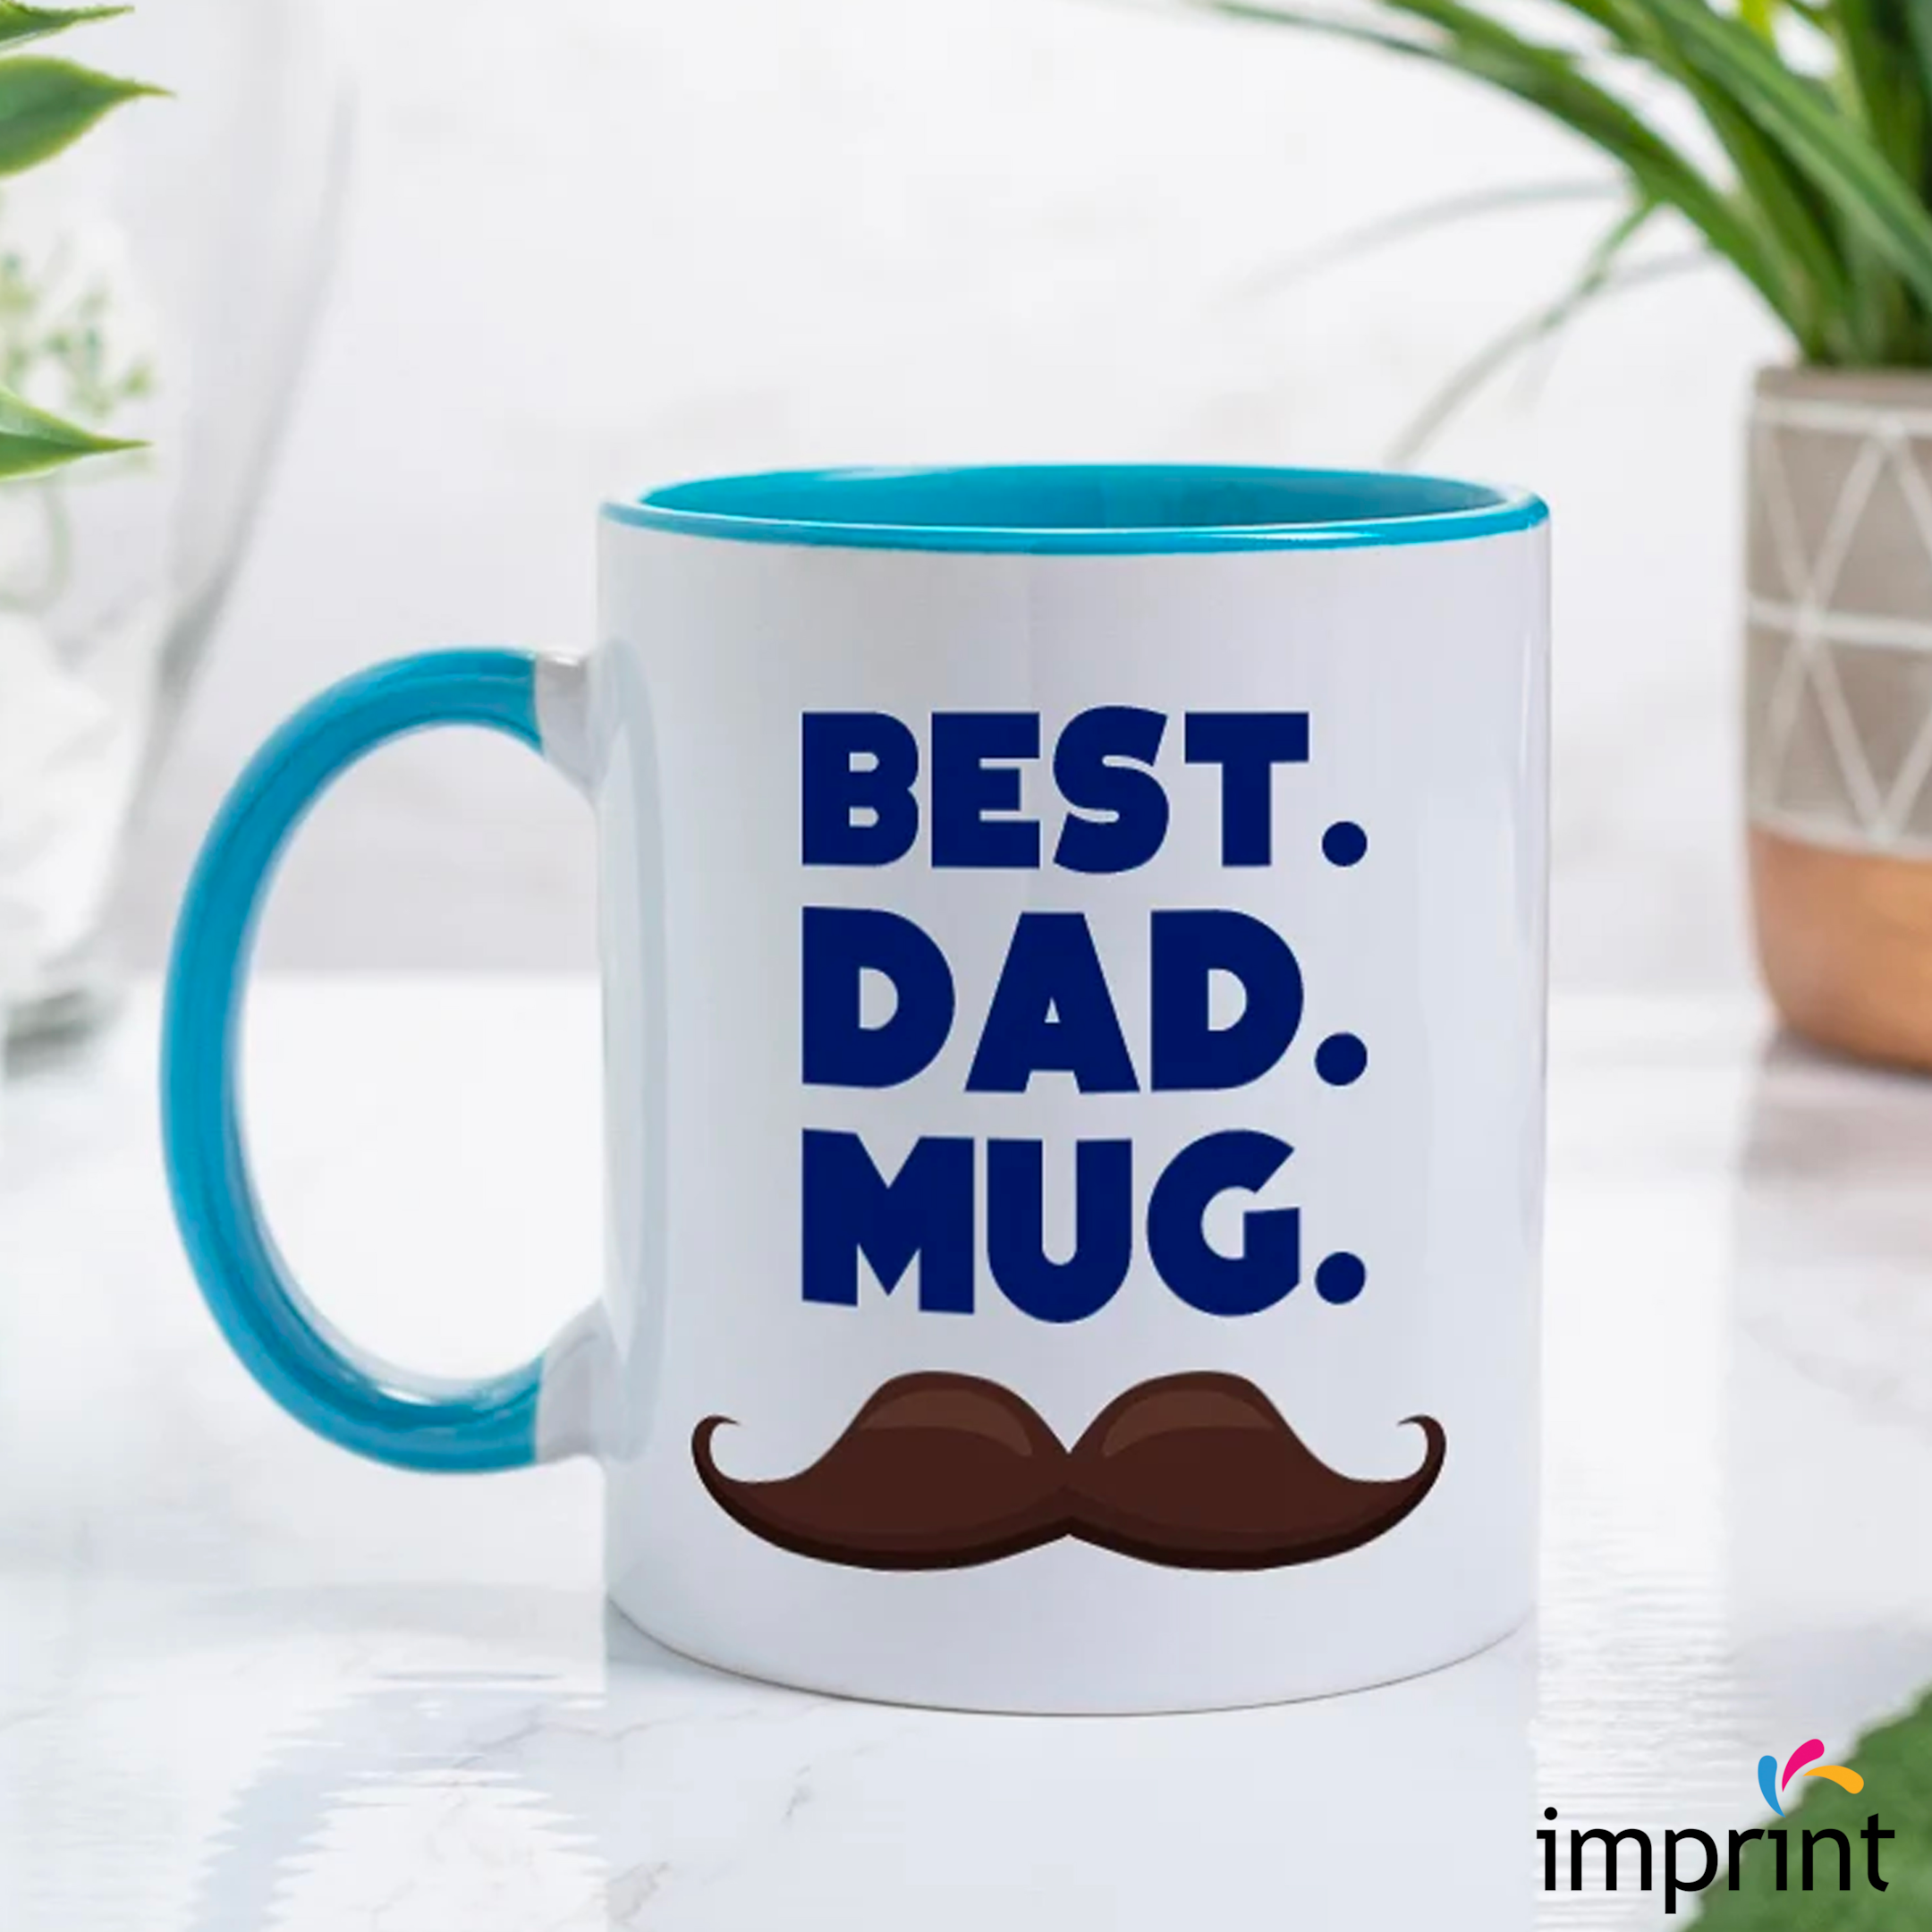 fun mug for dad